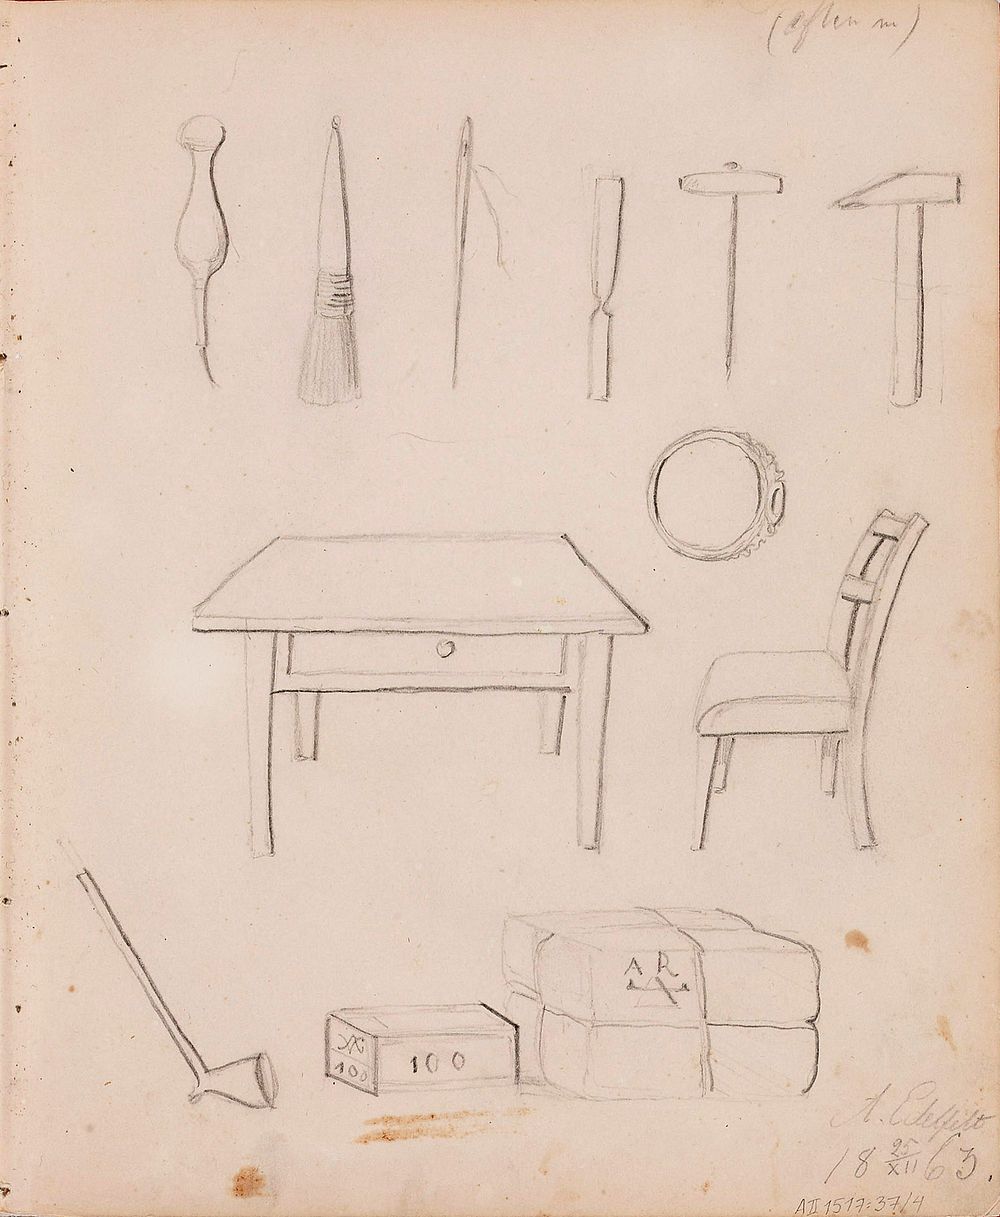 Ty&ouml;kaluja ; sormus ; p&ouml;yt&auml; ja tuoli ; paketteja. merkitty: a. edelfelt / 18 25/xii 63., 1863 - 1866 part of a…